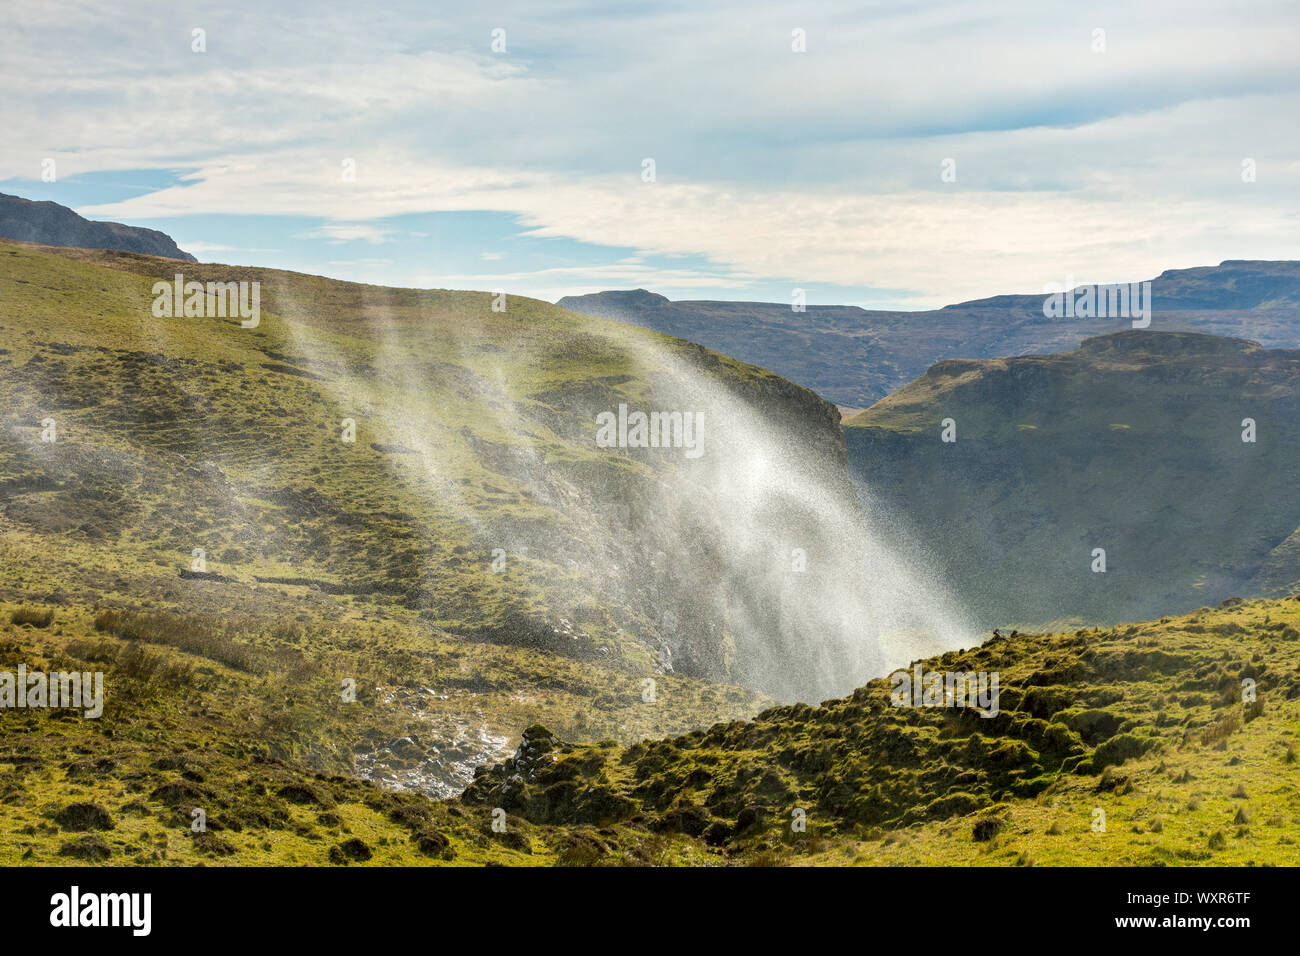 Spray from the Allt Mheididh waterfall being blown upwards by the wind, Talisker Bay, Minginish, Isle of Skye, Scotland, UK Stock Photo